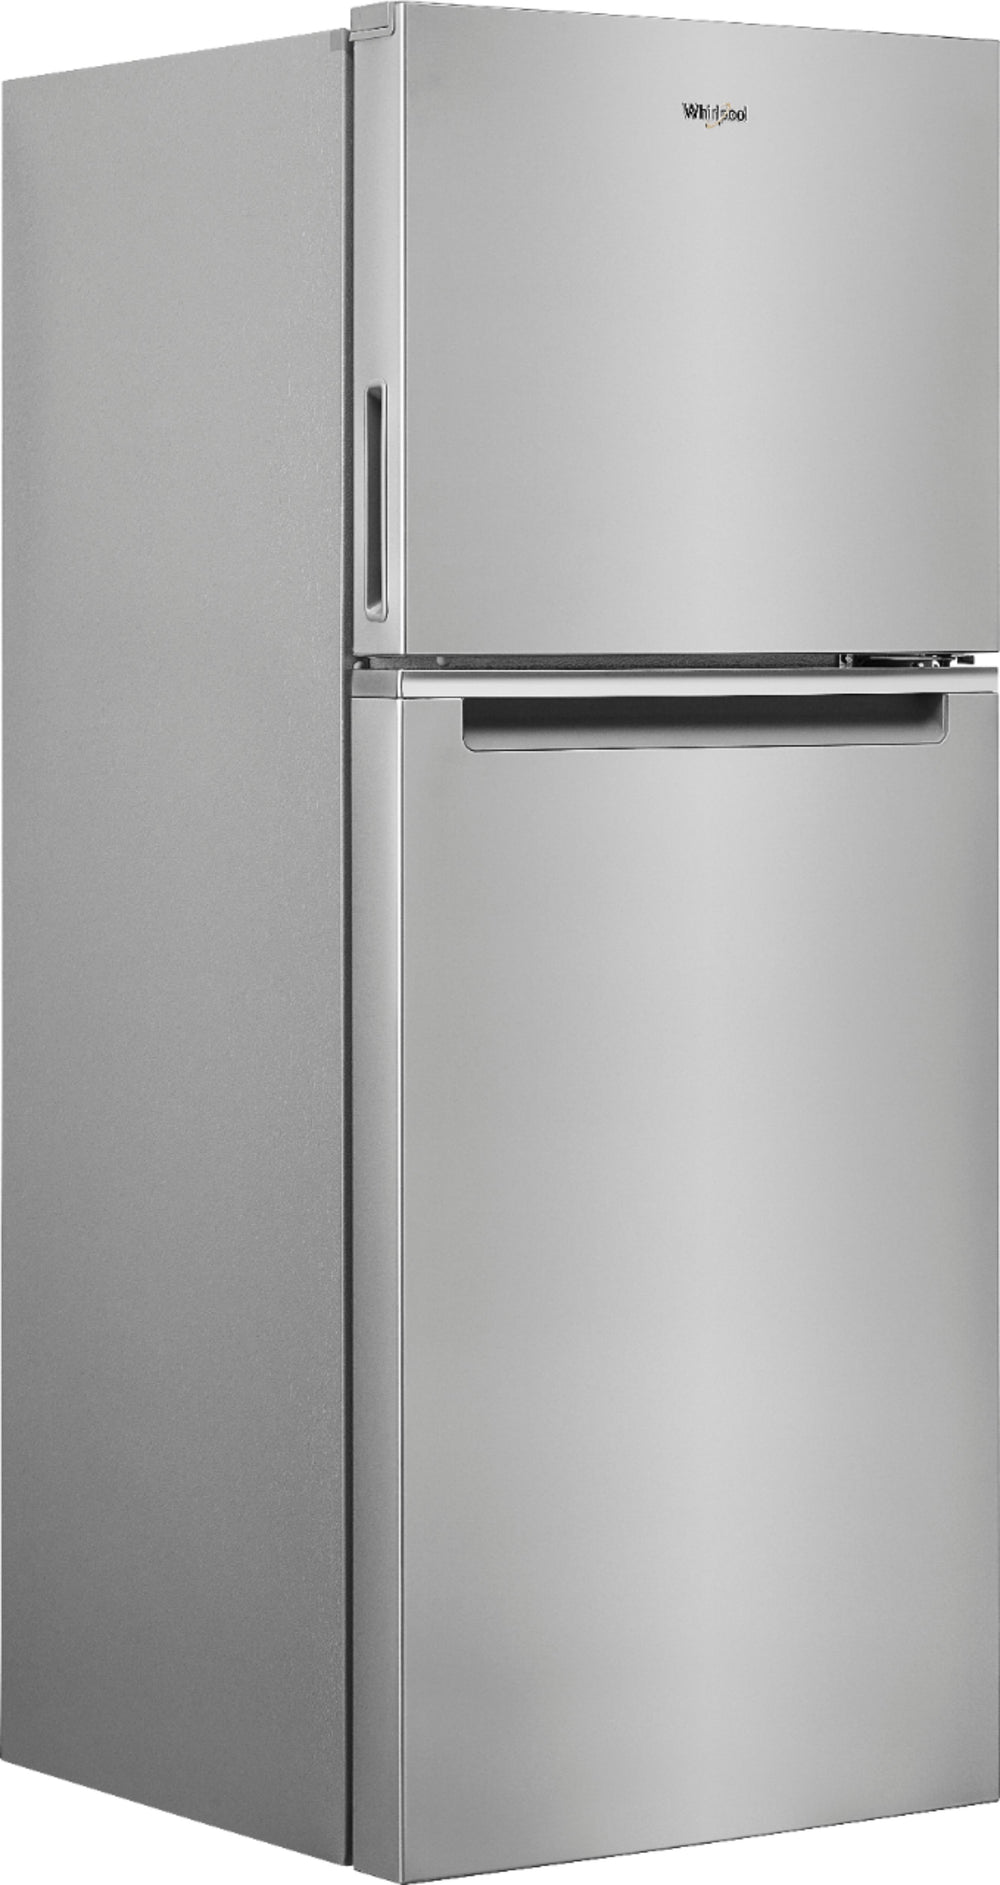 Whirlpool - 11.6 Cu. Ft. Top-Freezer Counter-Depth Refrigerator - Stainless steel_1